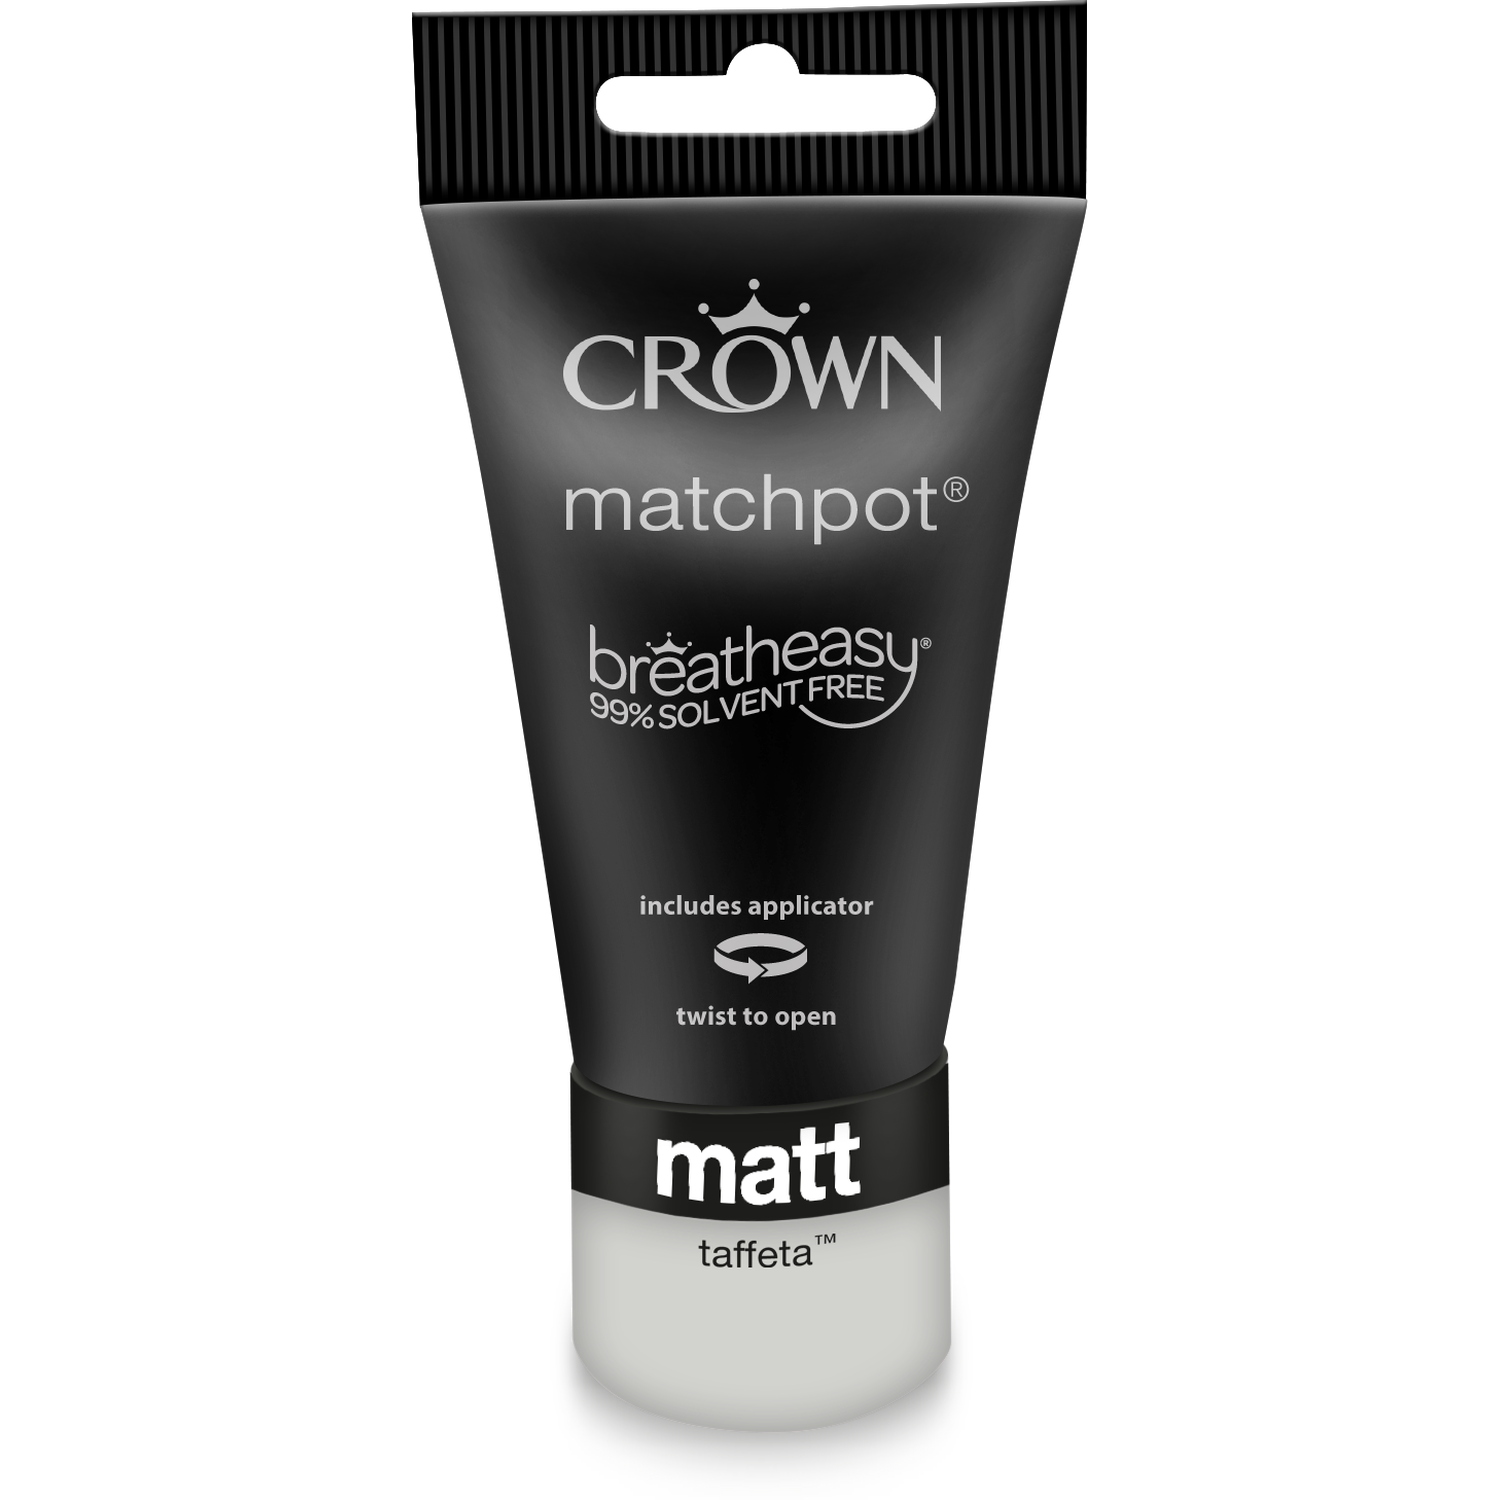 Crown Breatheasy Taffeta Matt Feature Wall Tester Pot 40ml Image